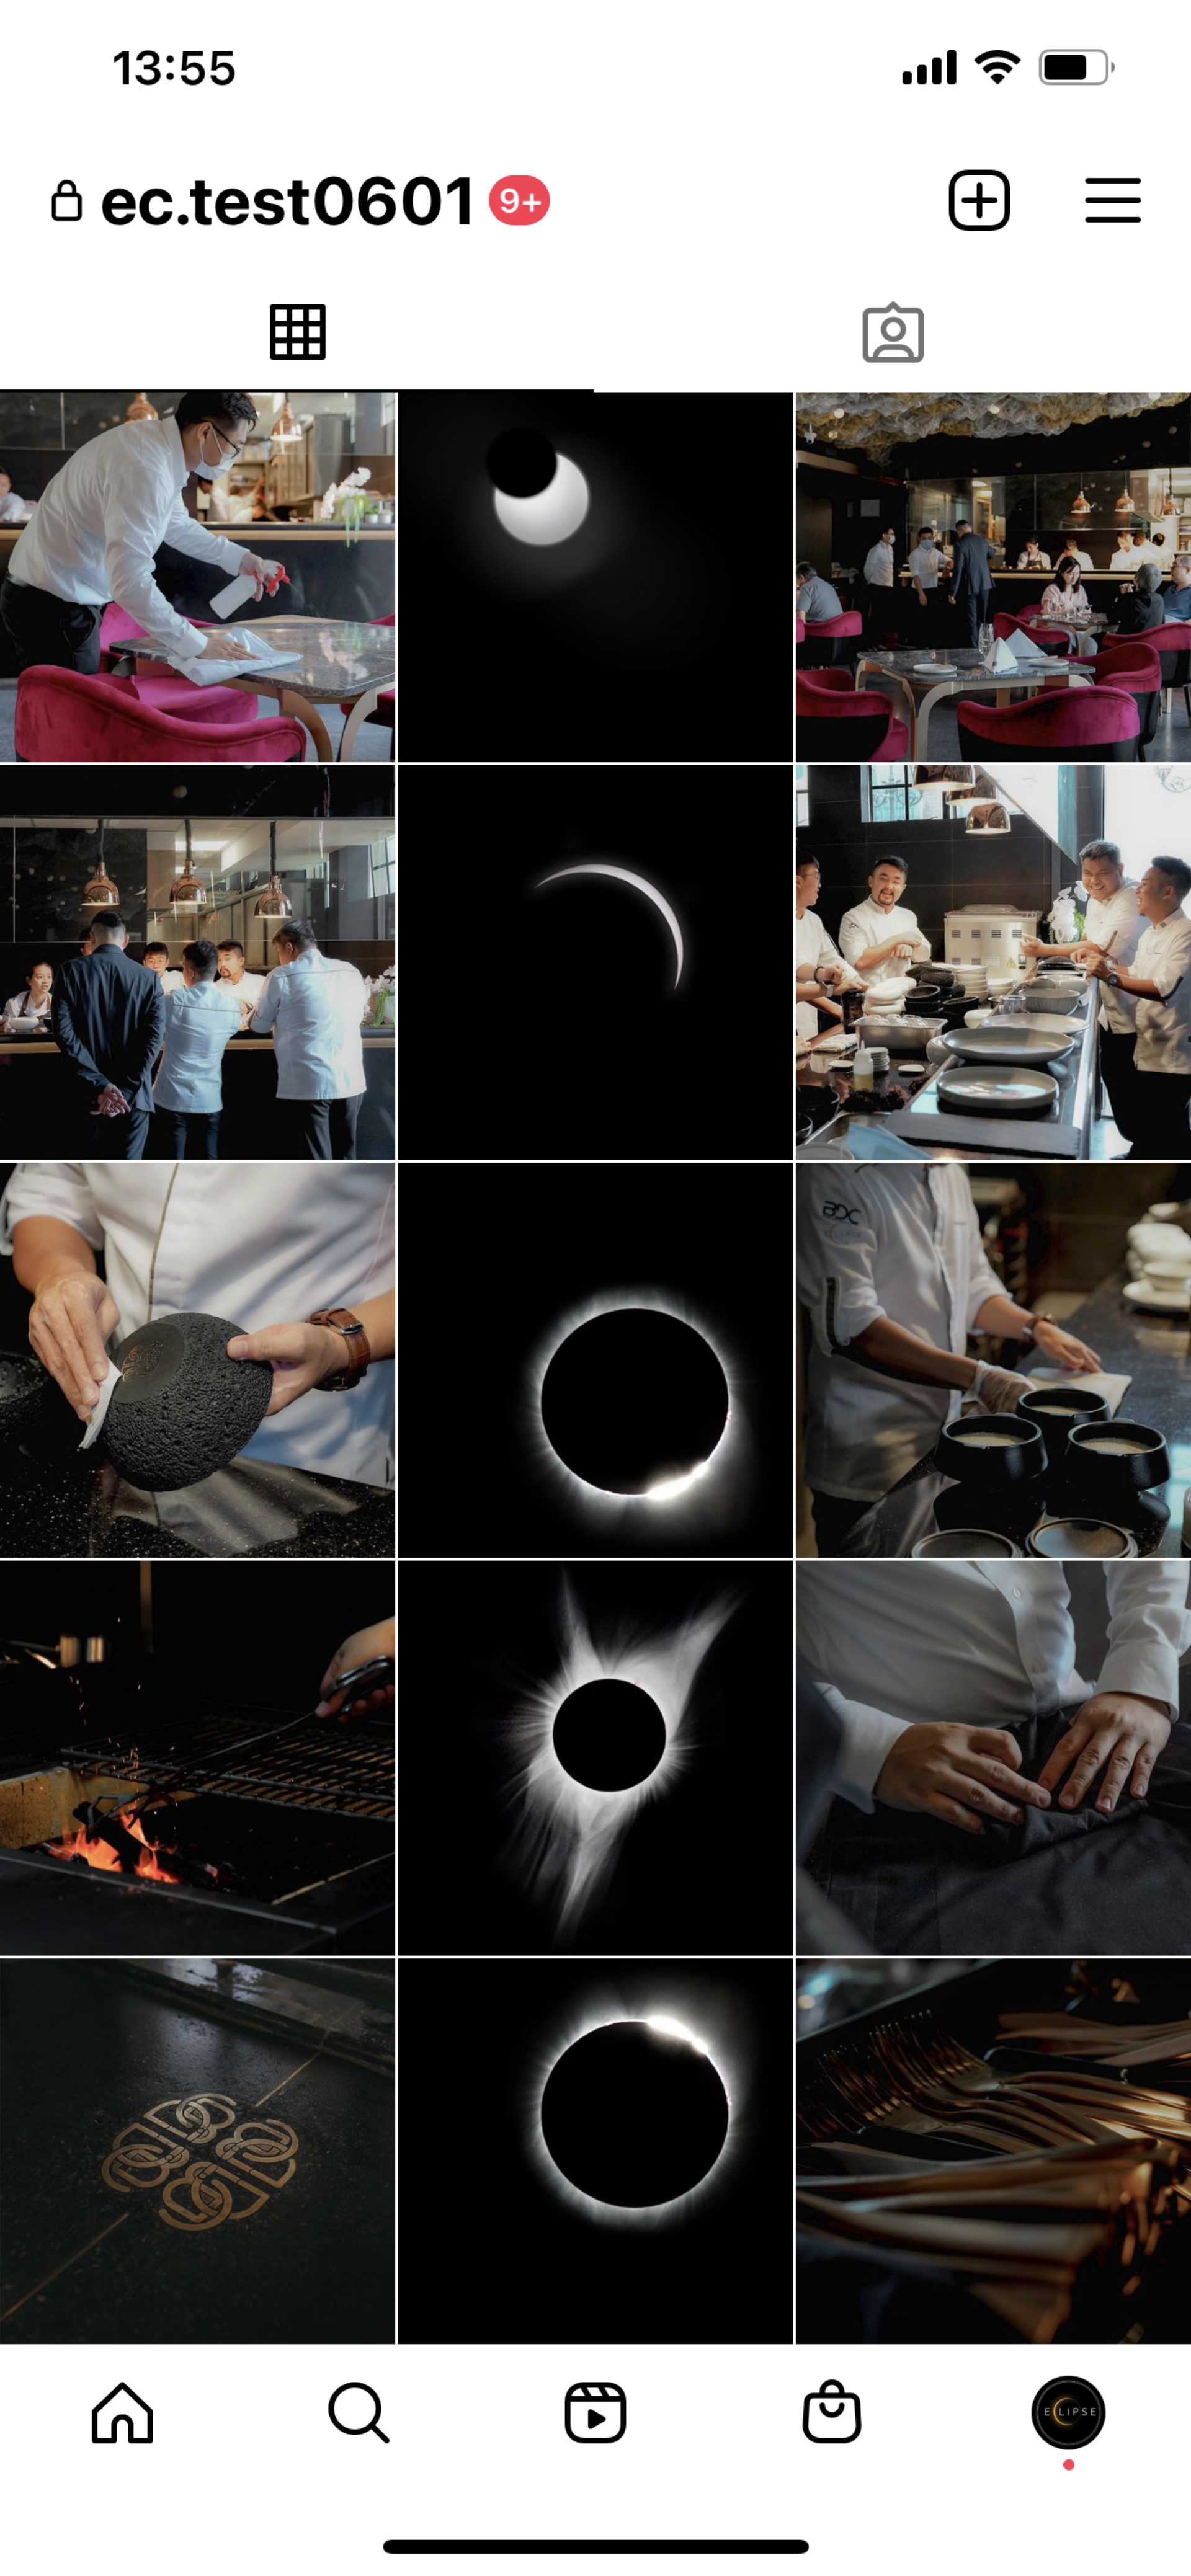 Restaurant Eclipse Instagram feed 2 agency website